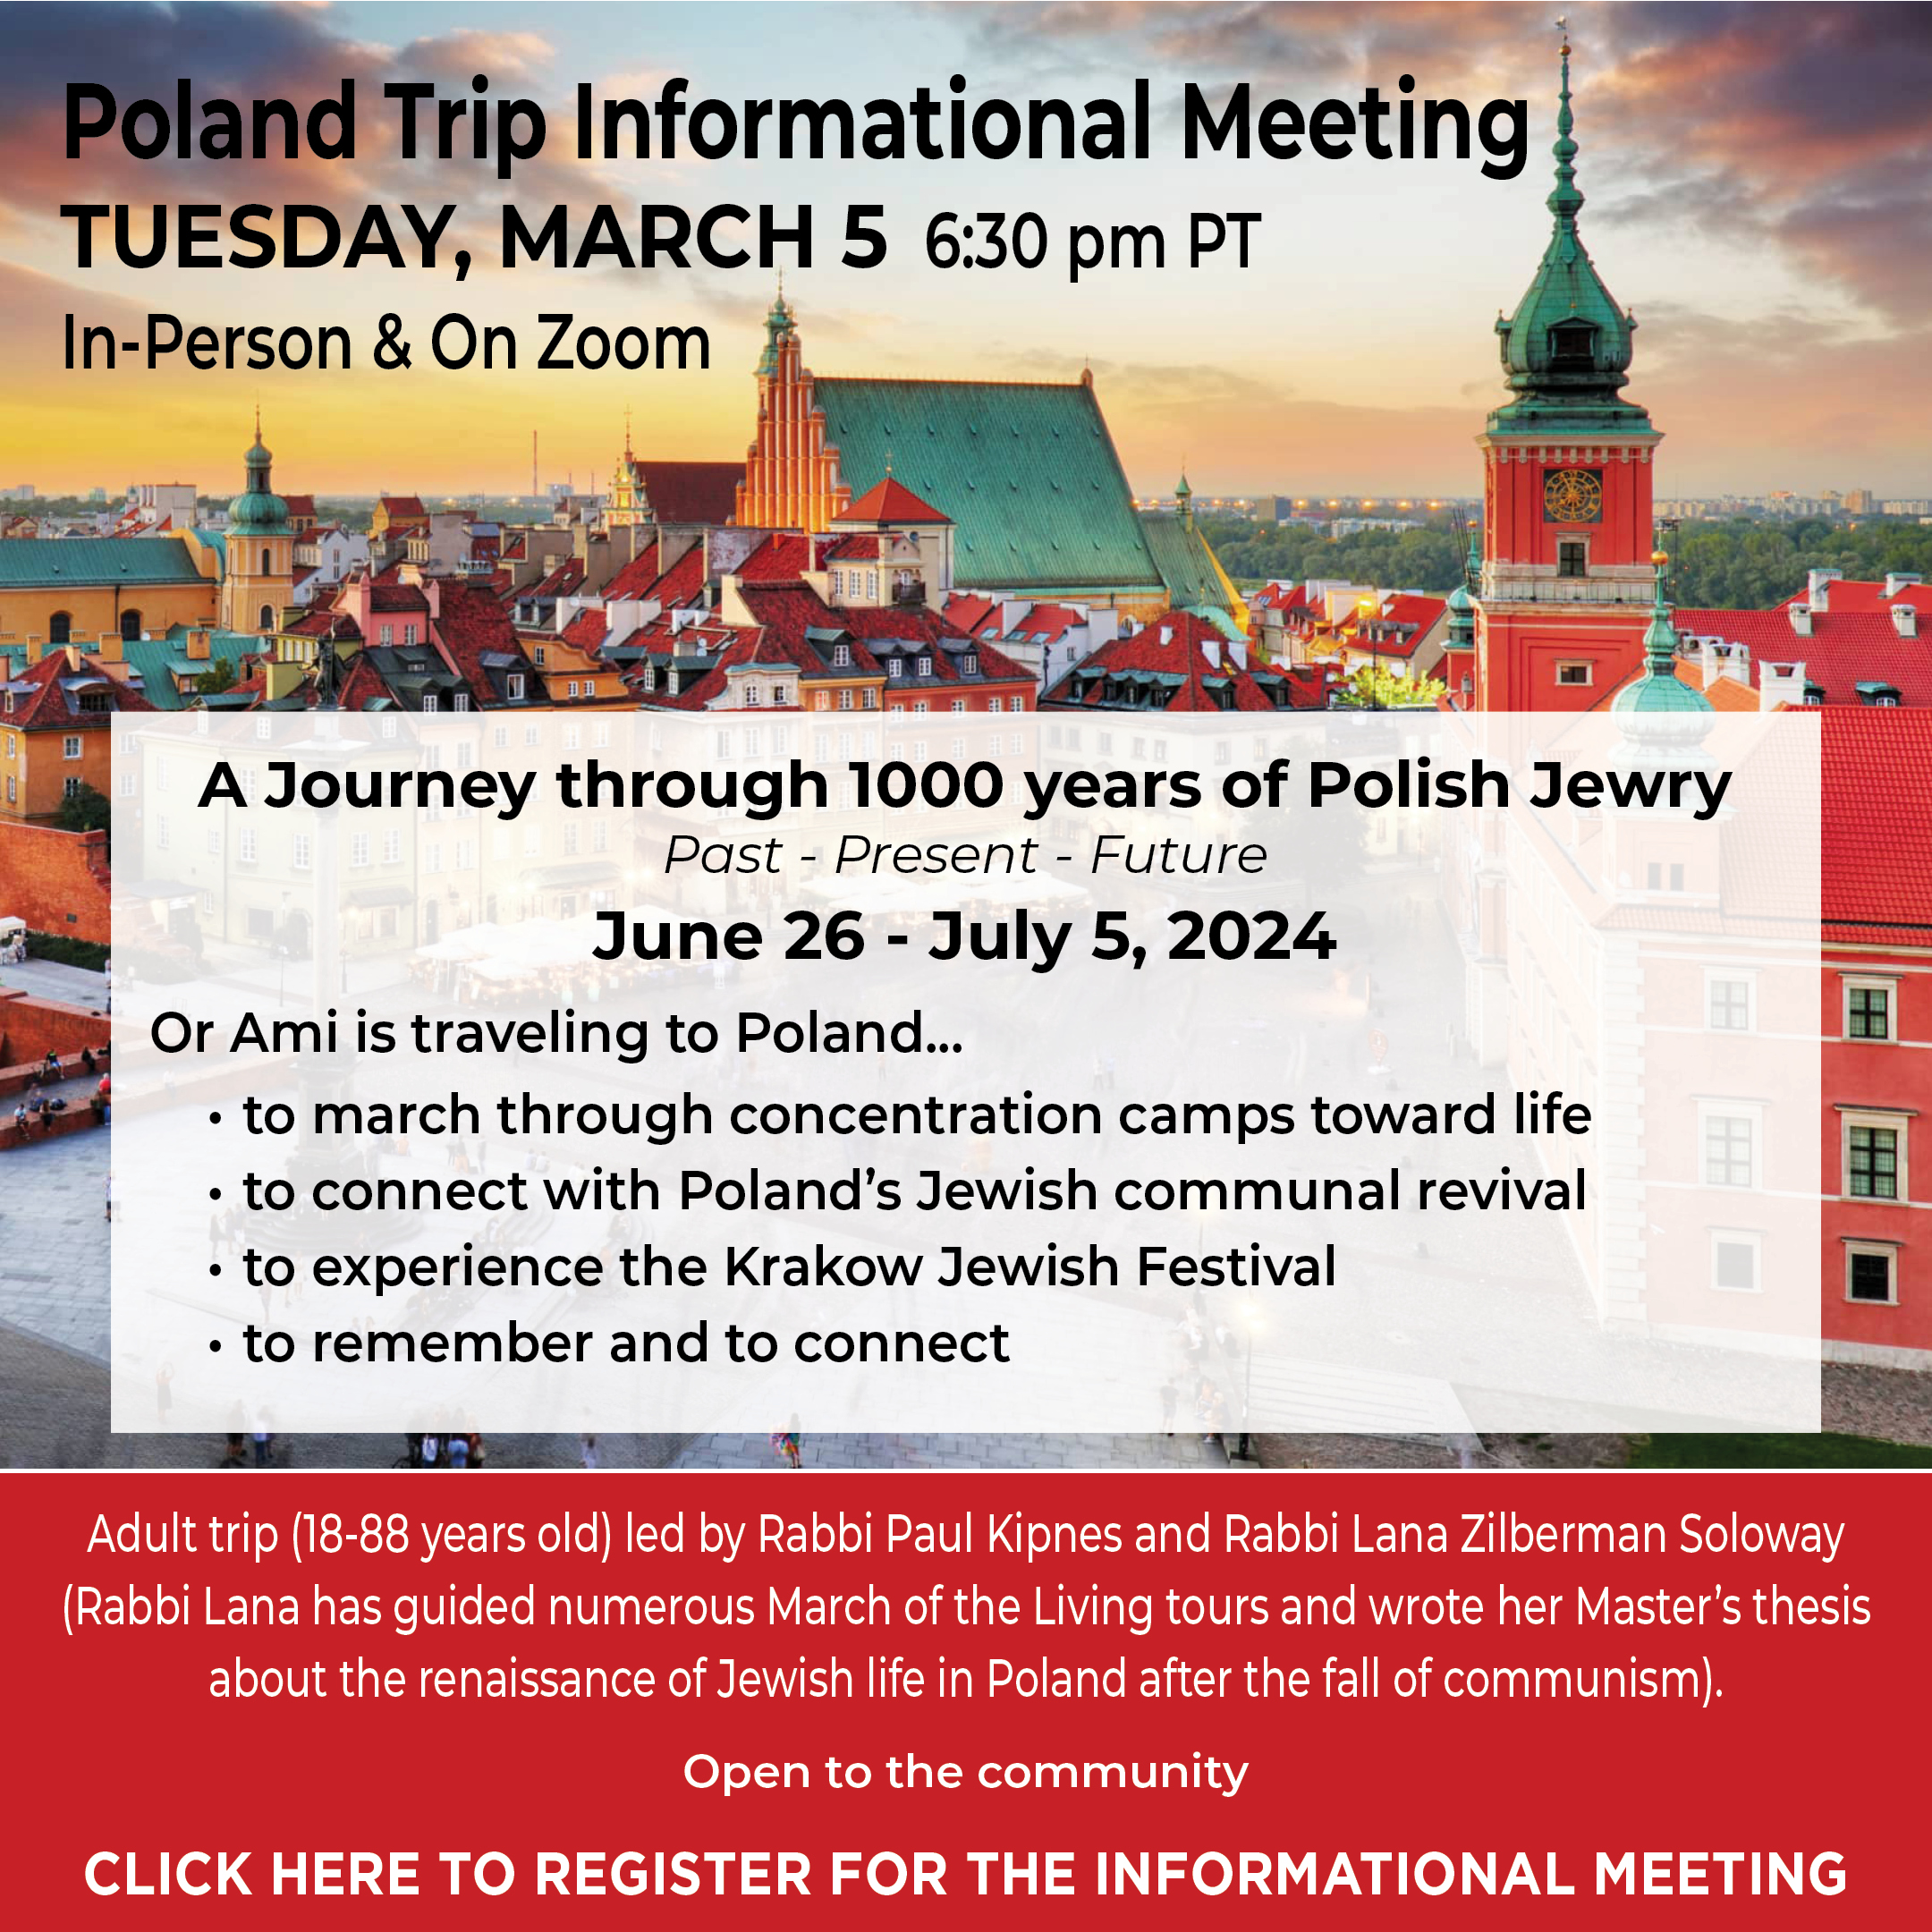 *Or Ami Poland Trip Info Meeting 2 CLICK